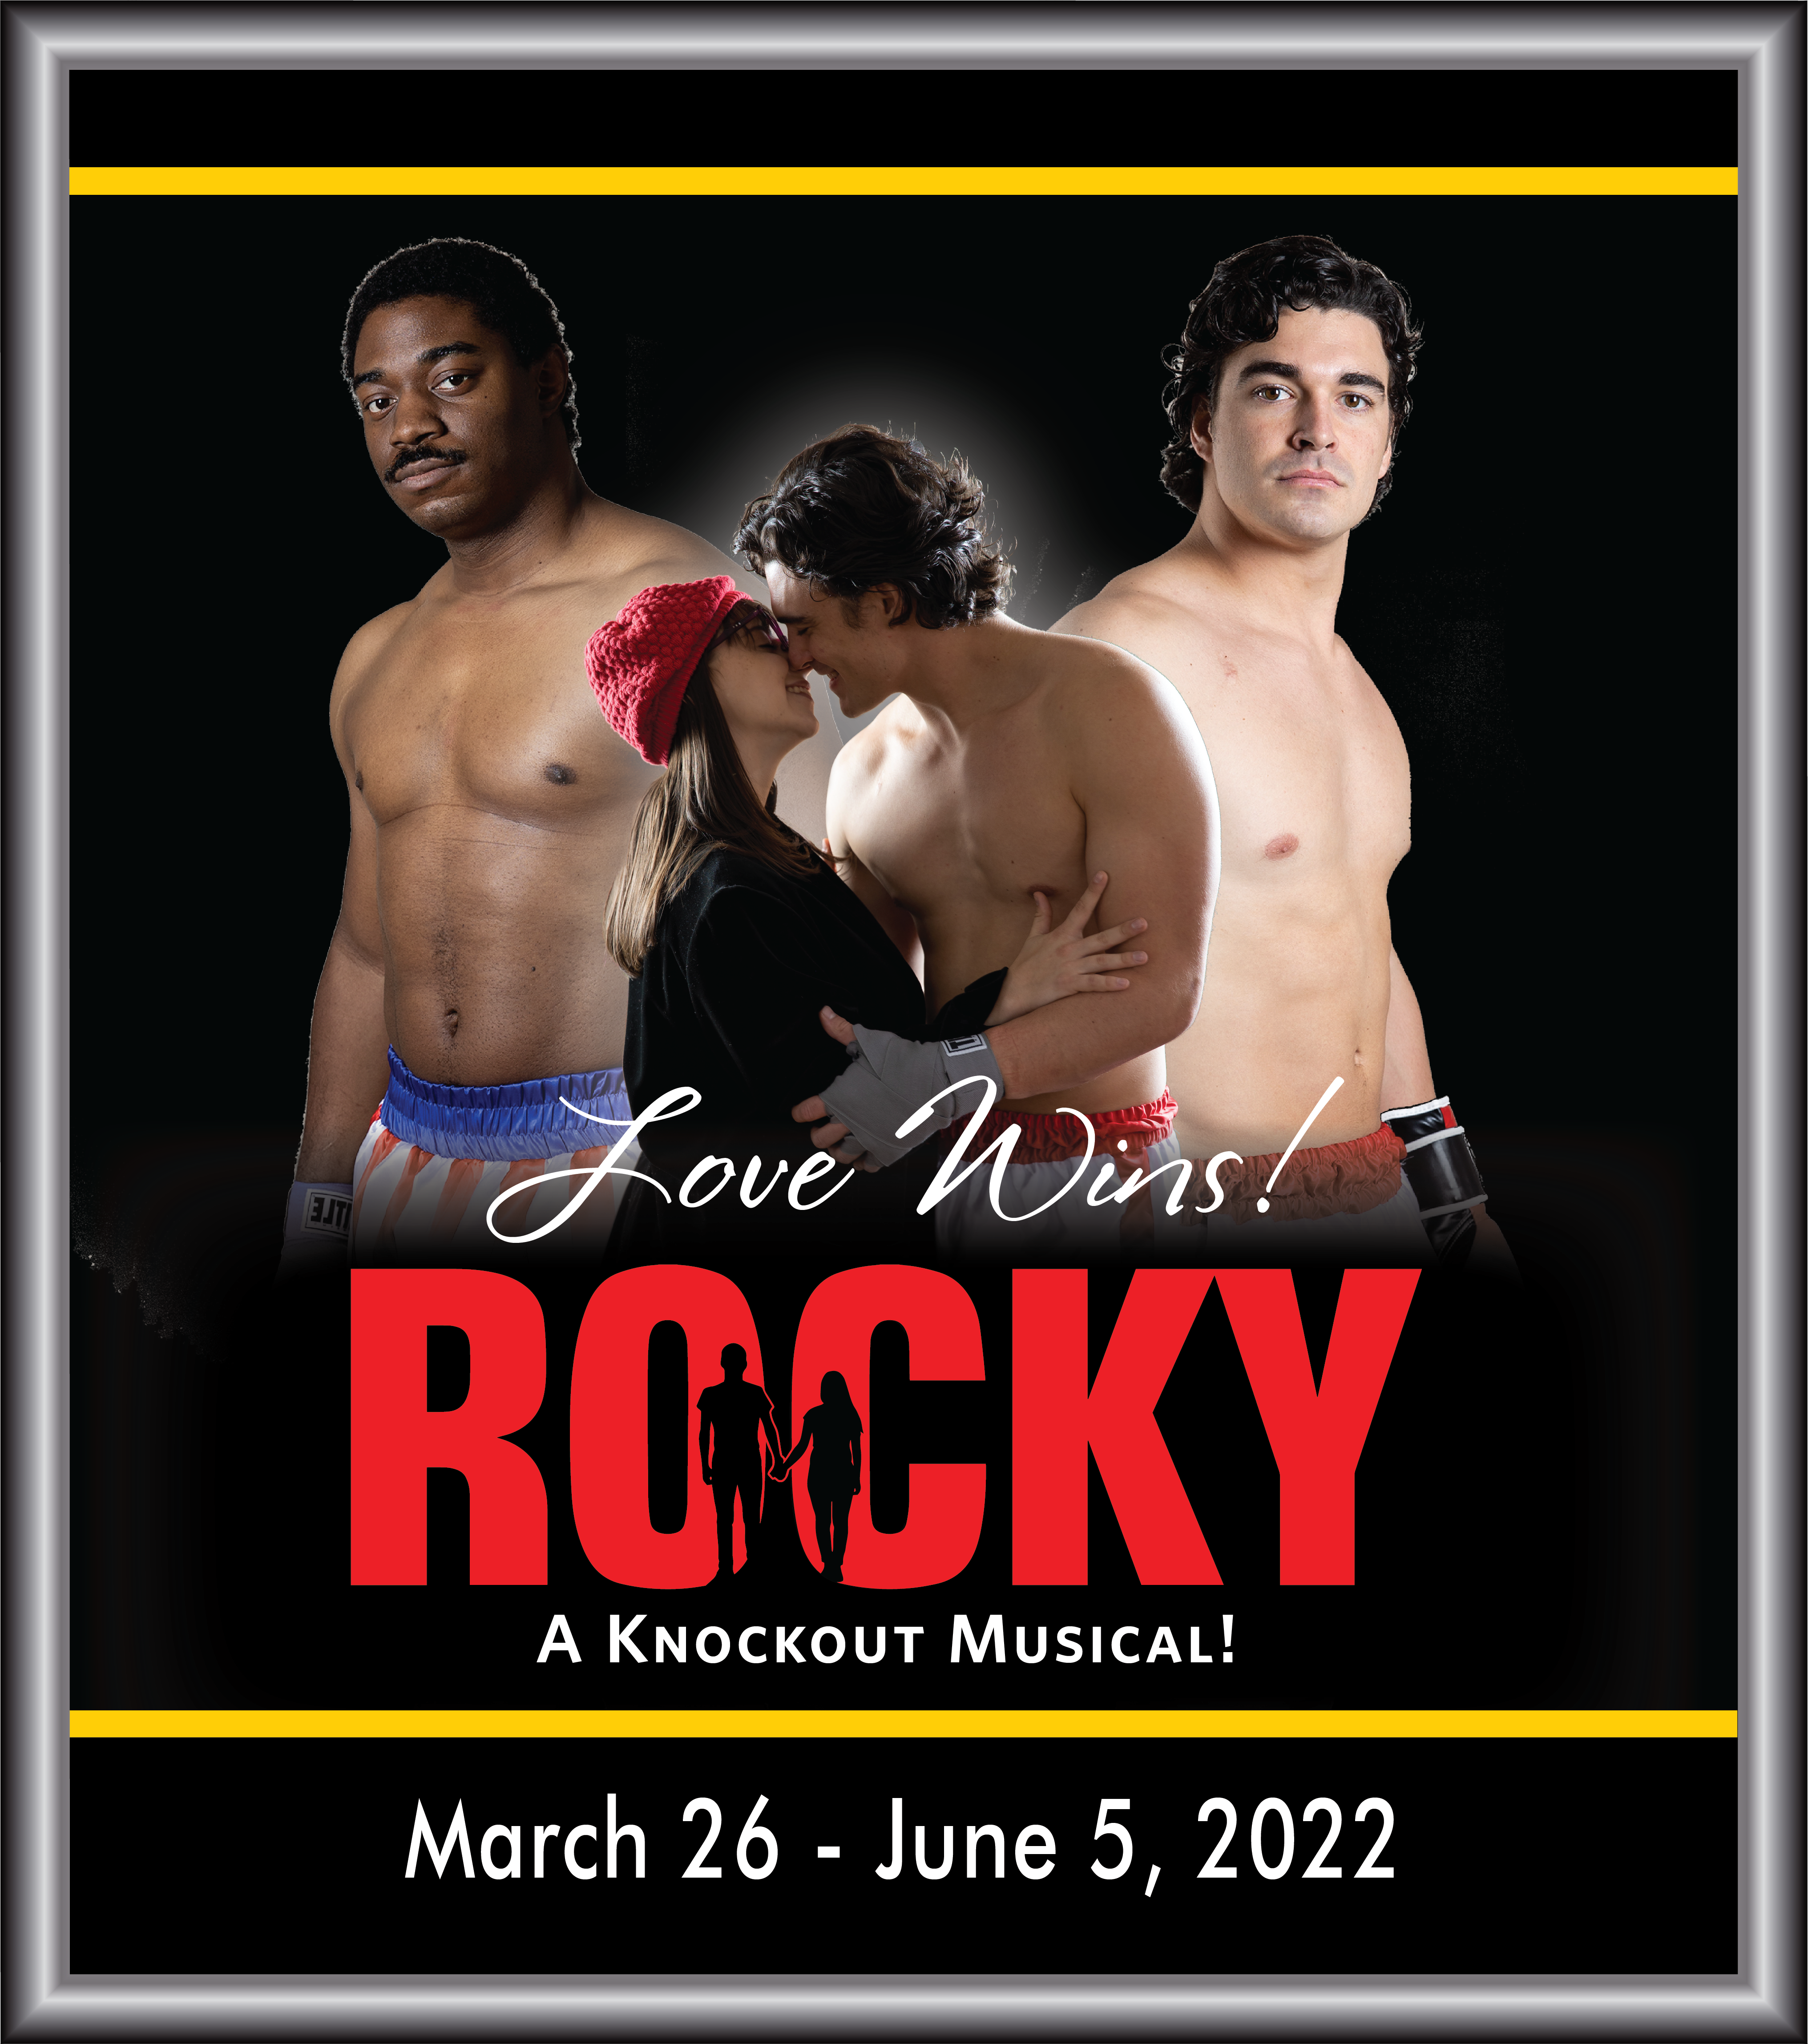 Yo, Adrian: 40 years of 'Rocky